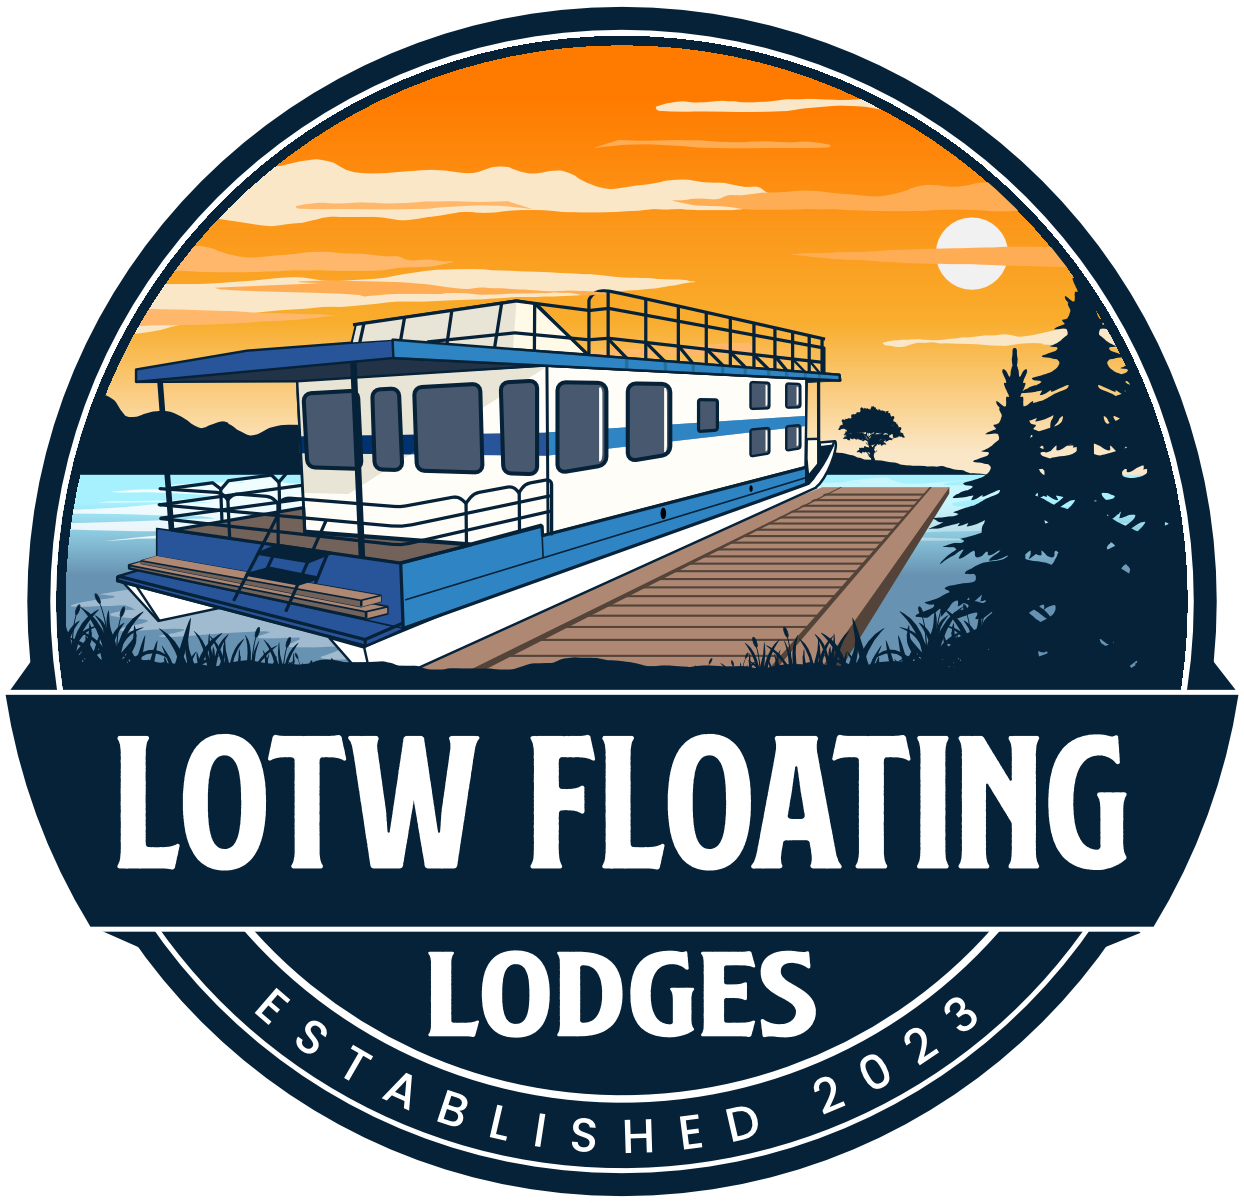 LOTW Floating Lodges